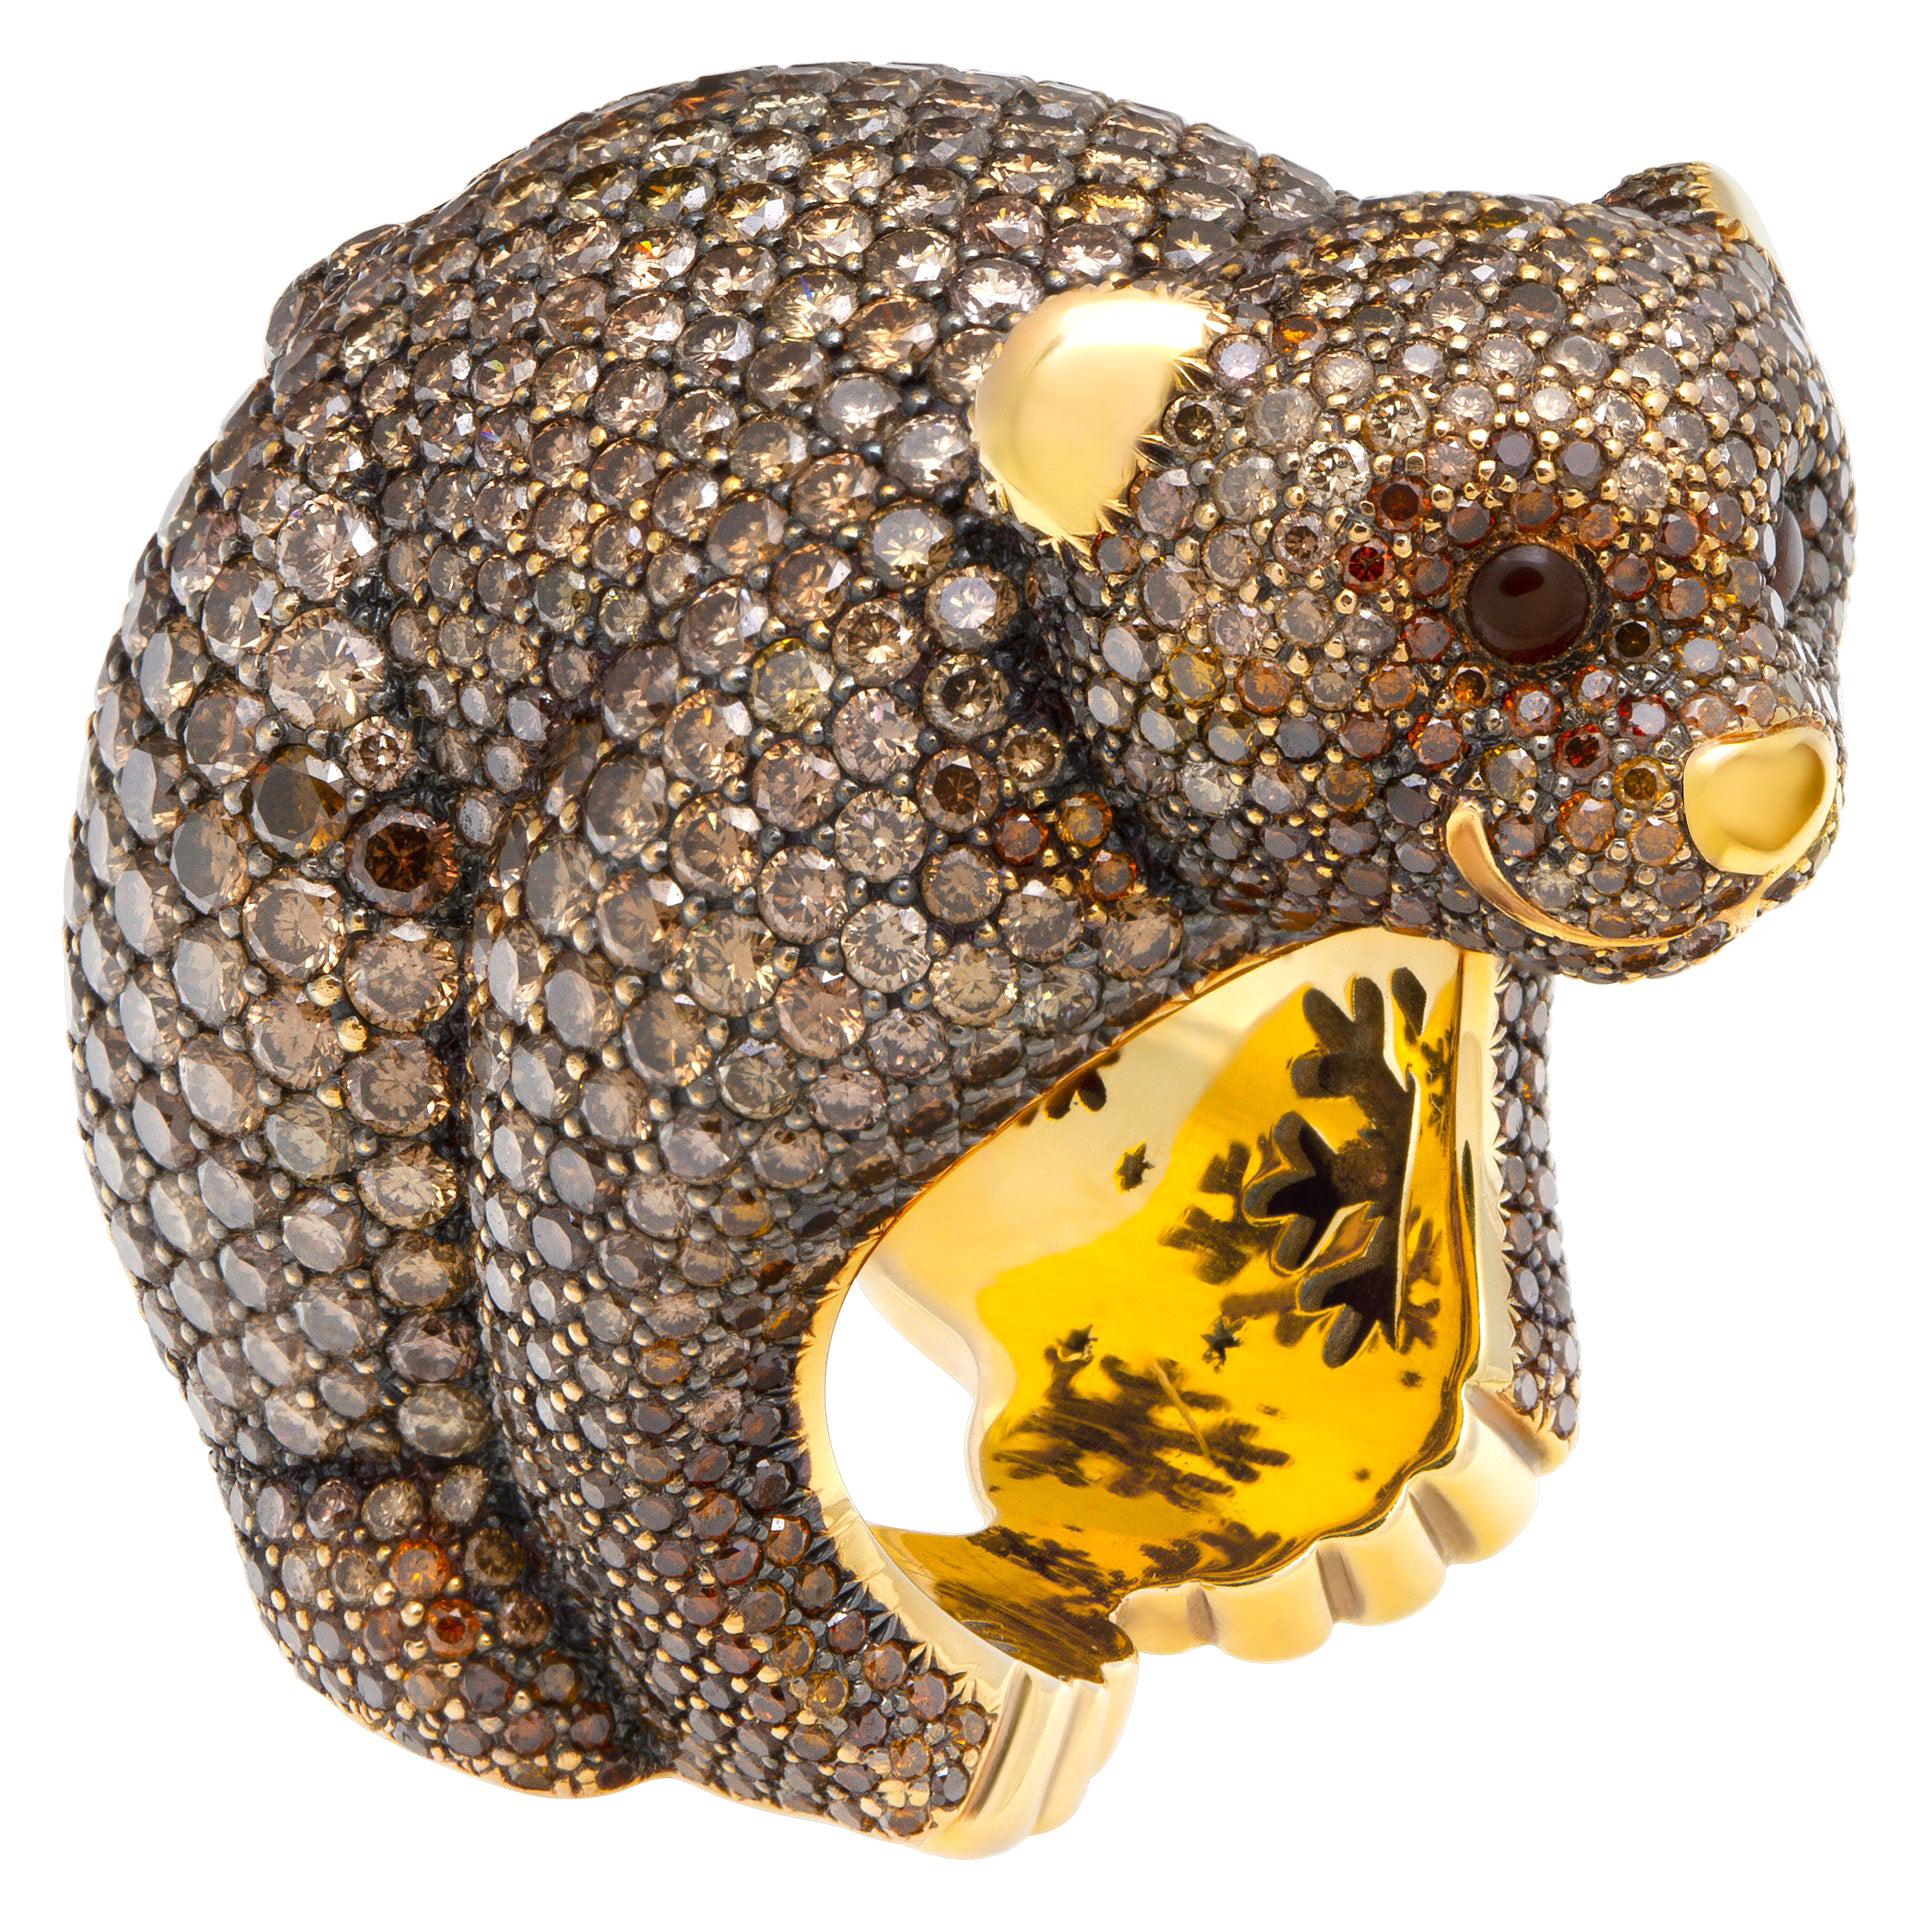 Masterpiece Chopard Diamond Bear "Animal World Collection" Ring in 18 Karat For Sale